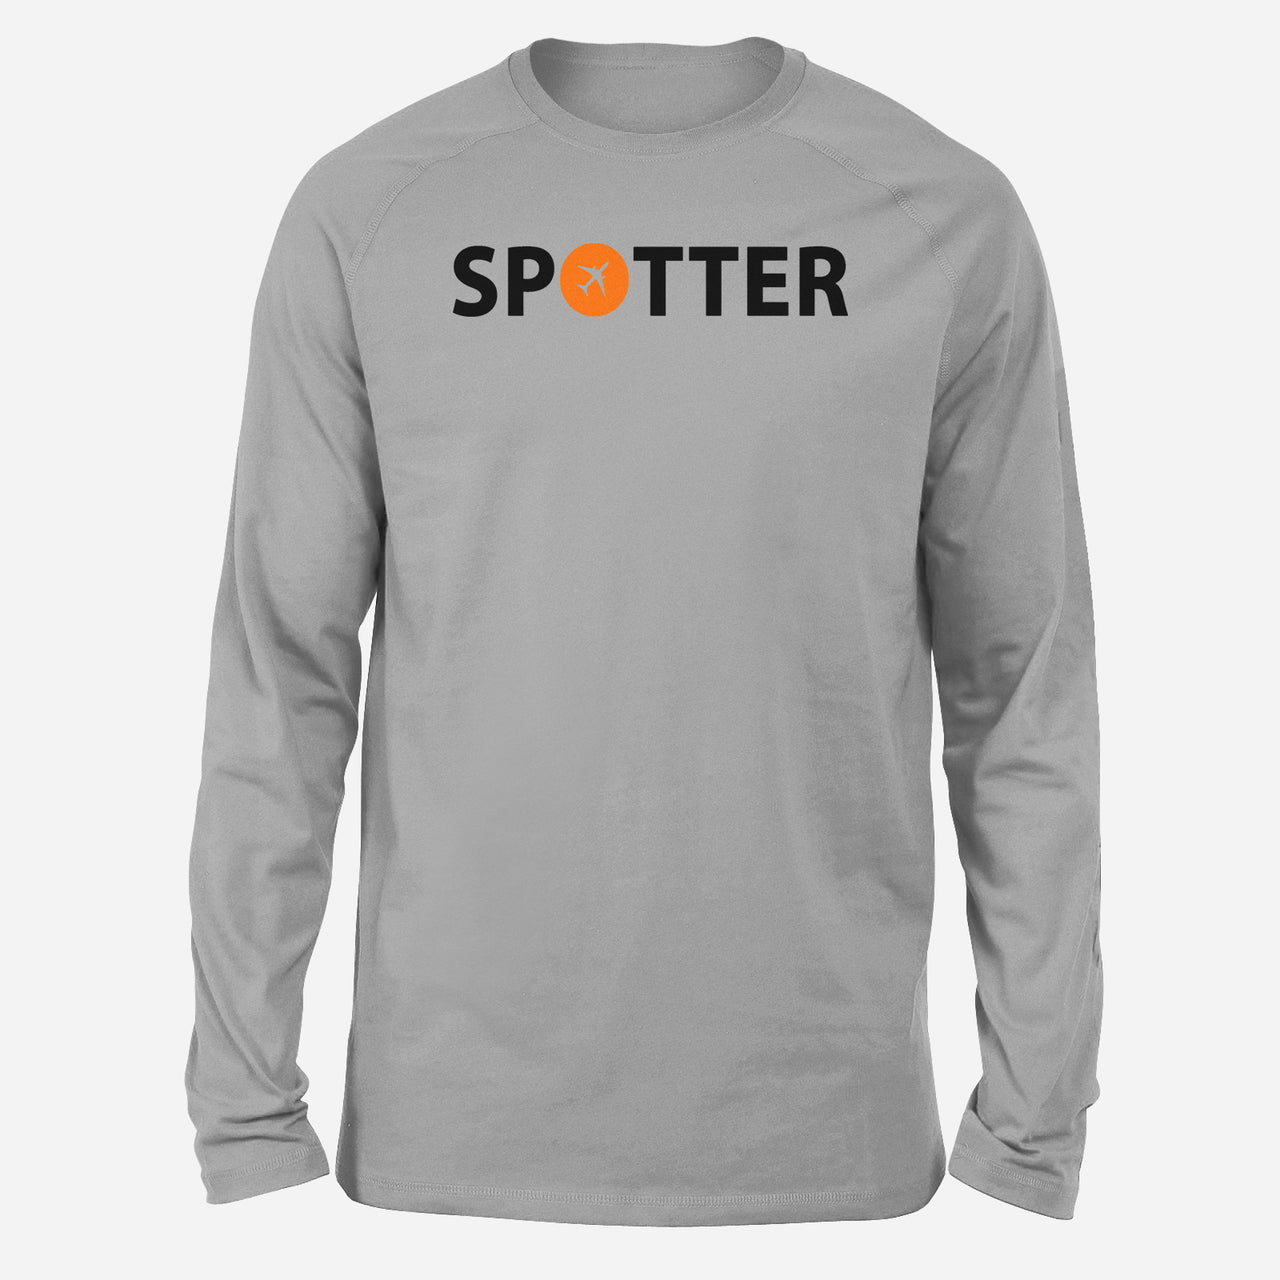 Spotter Designed Long-Sleeve T-Shirts